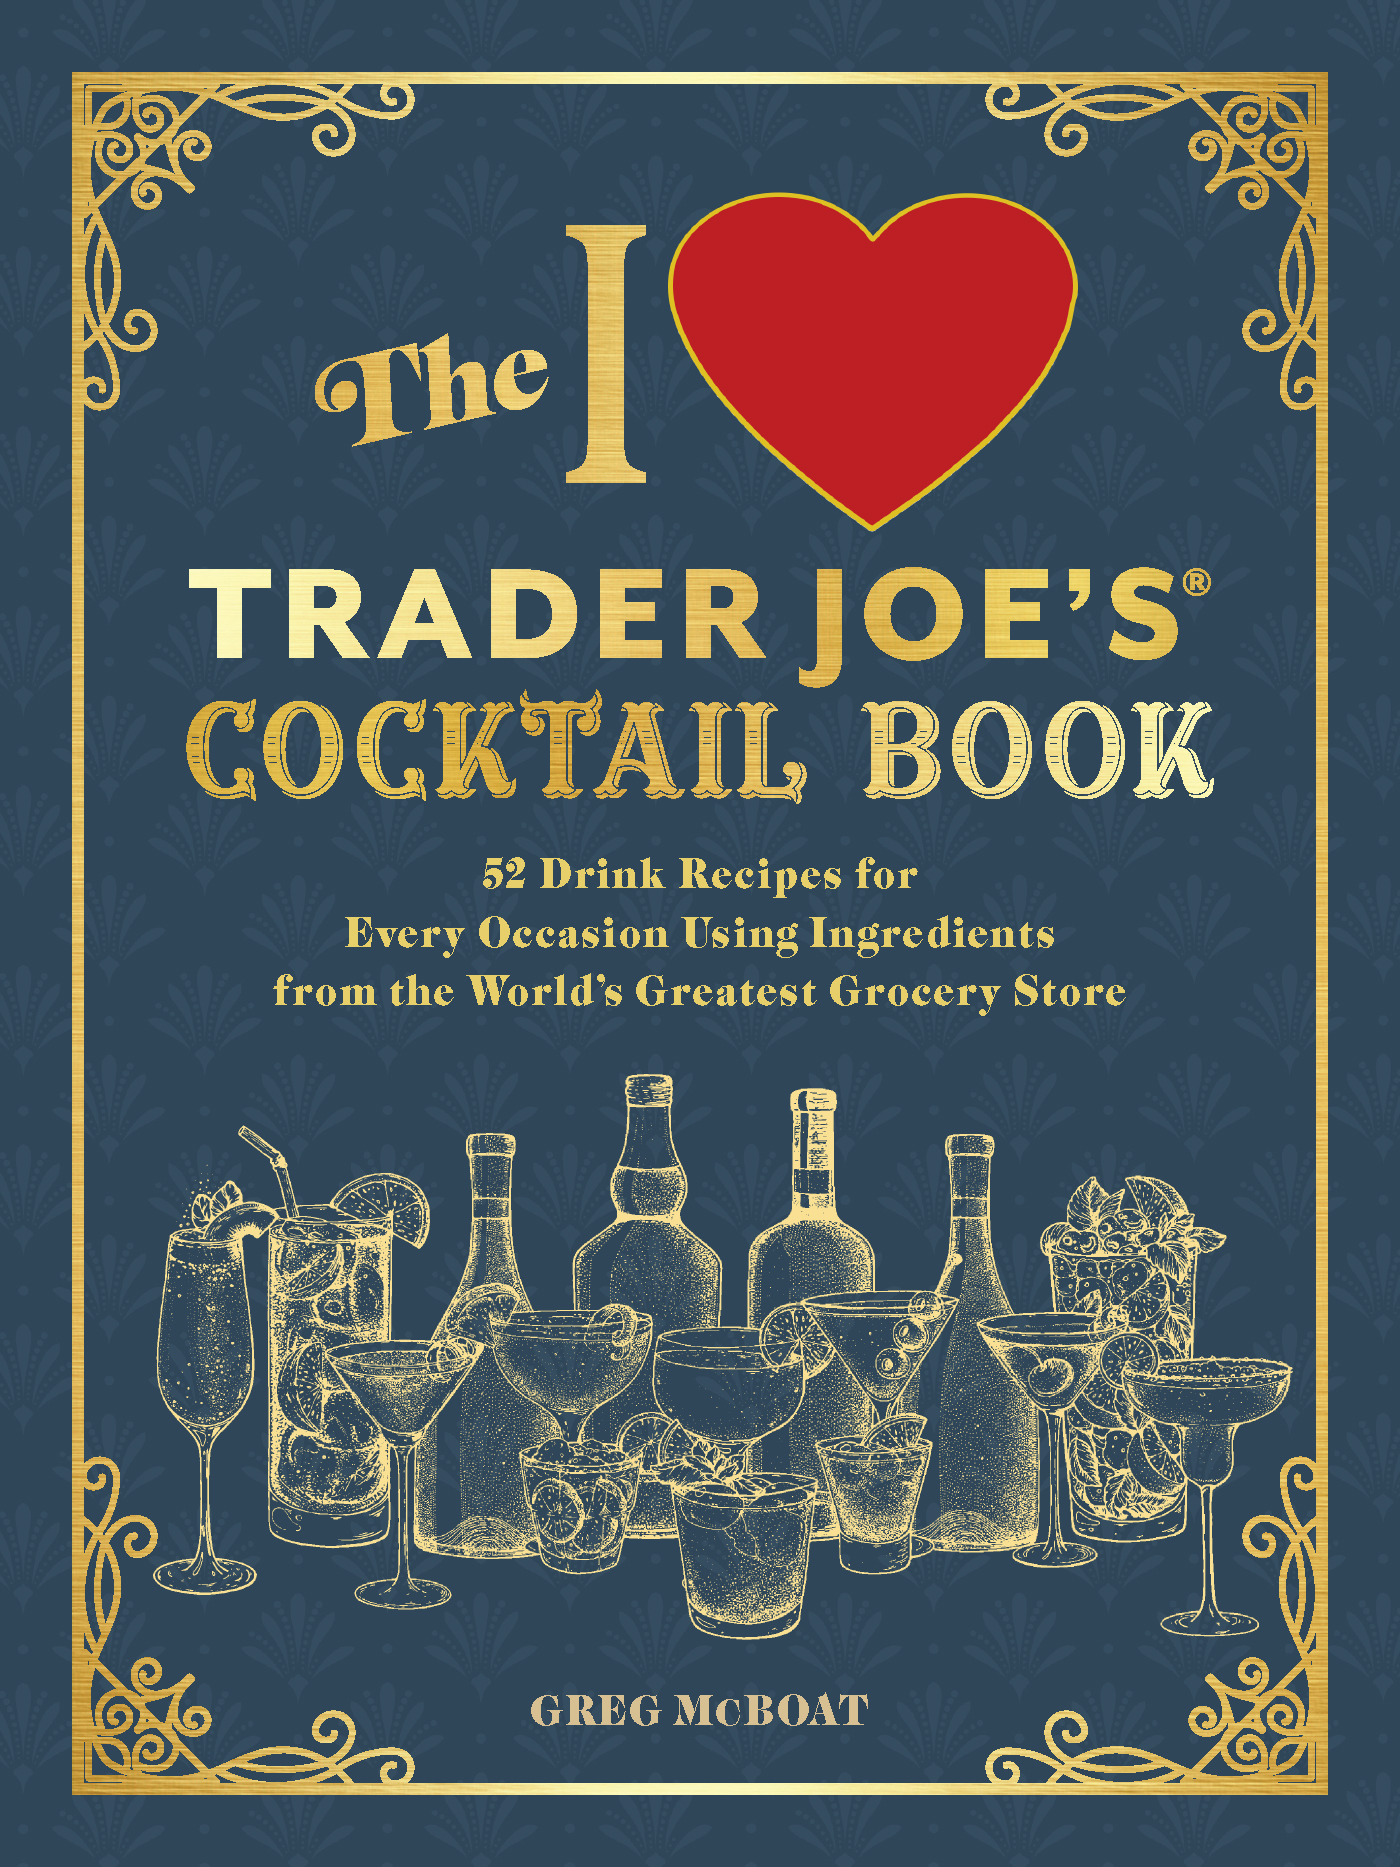 I Love Trader Joe's Cocktail Book-front.indd